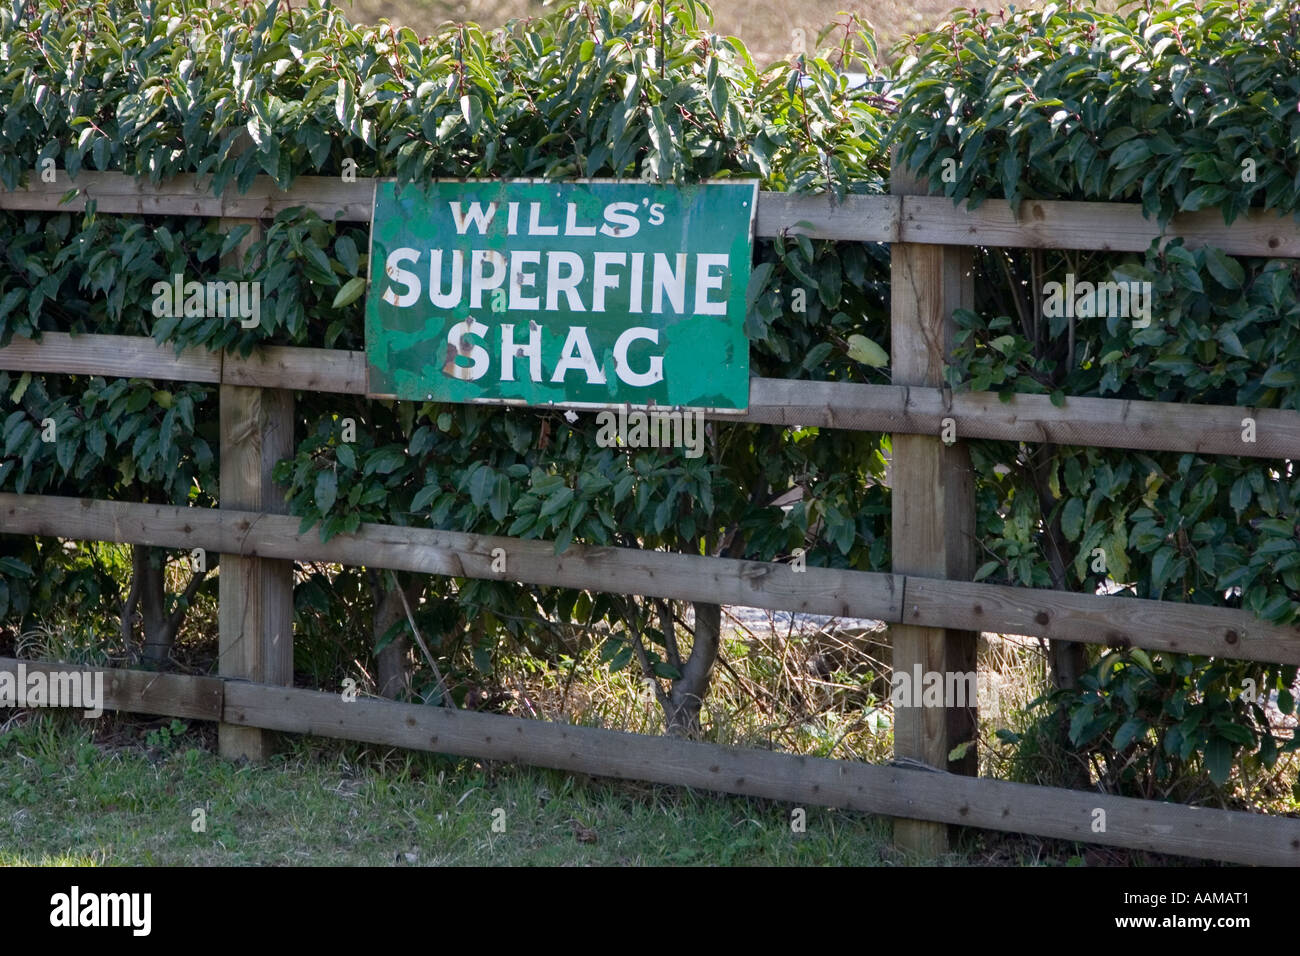 Wills Superfine Shag sign on fence Stock Photo